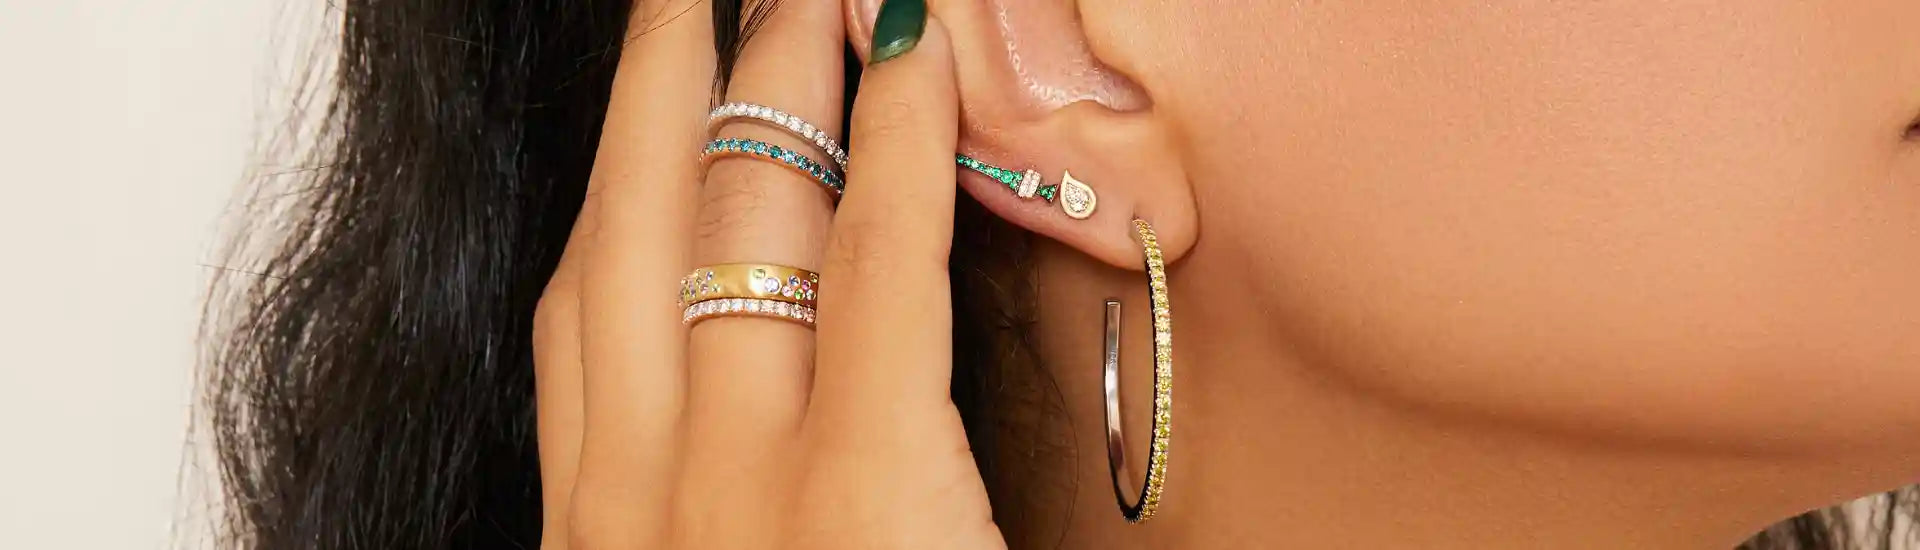 Azra Mehdi Jewelry